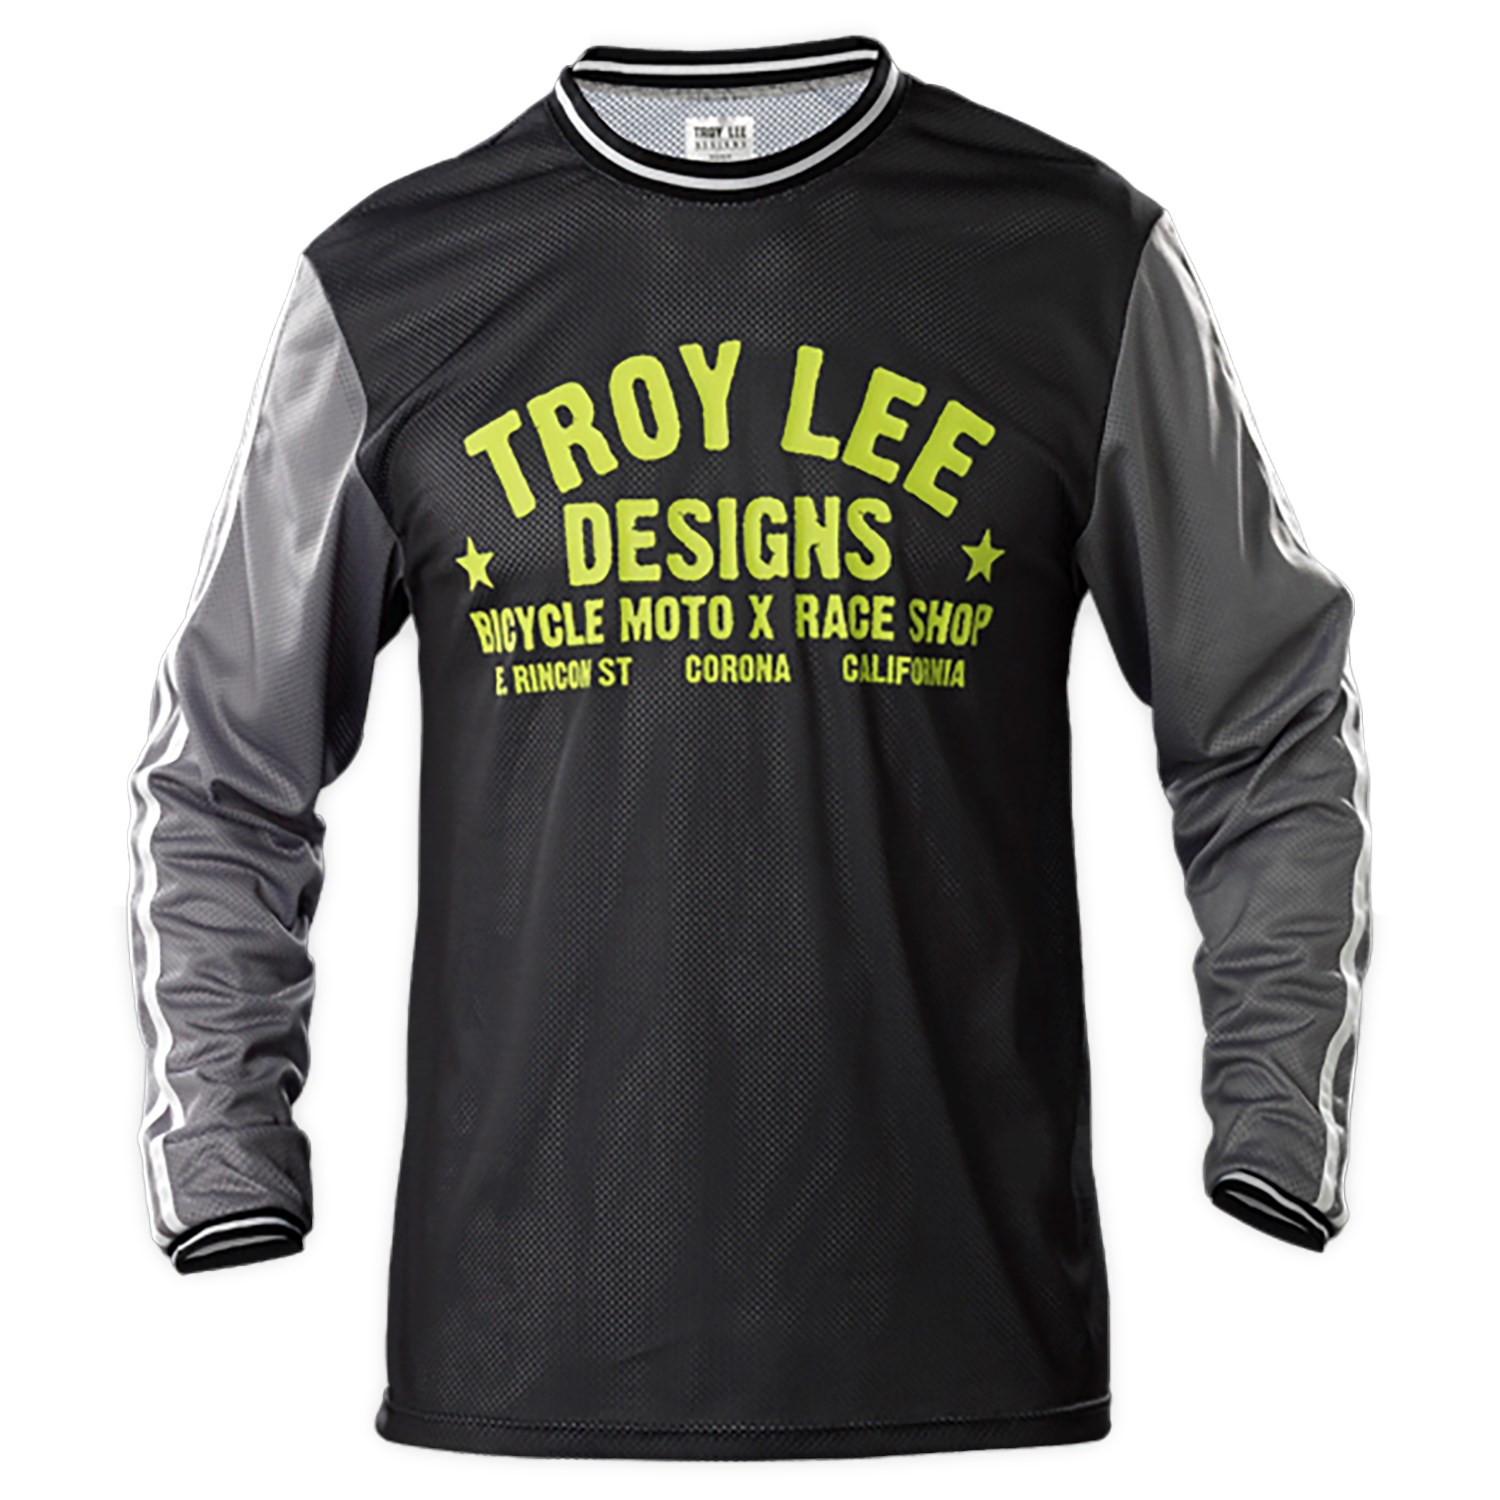 troy lee designs super retro jersey